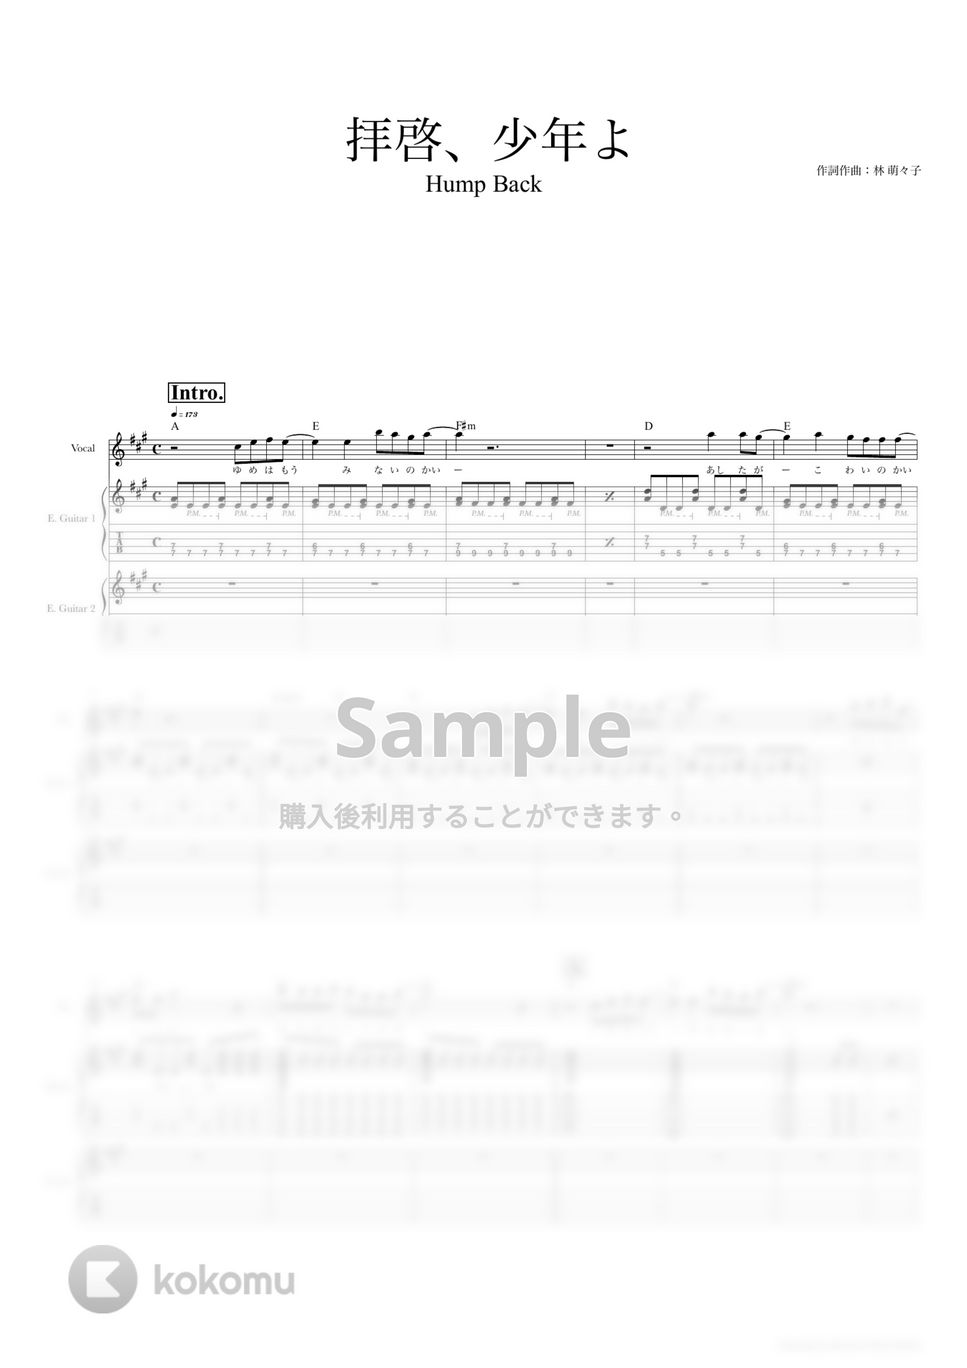 Hump Back - 拝啓、少年よ (ギタースコア・歌詞・コード付き) by TRIAD GUITAR SCHOOL